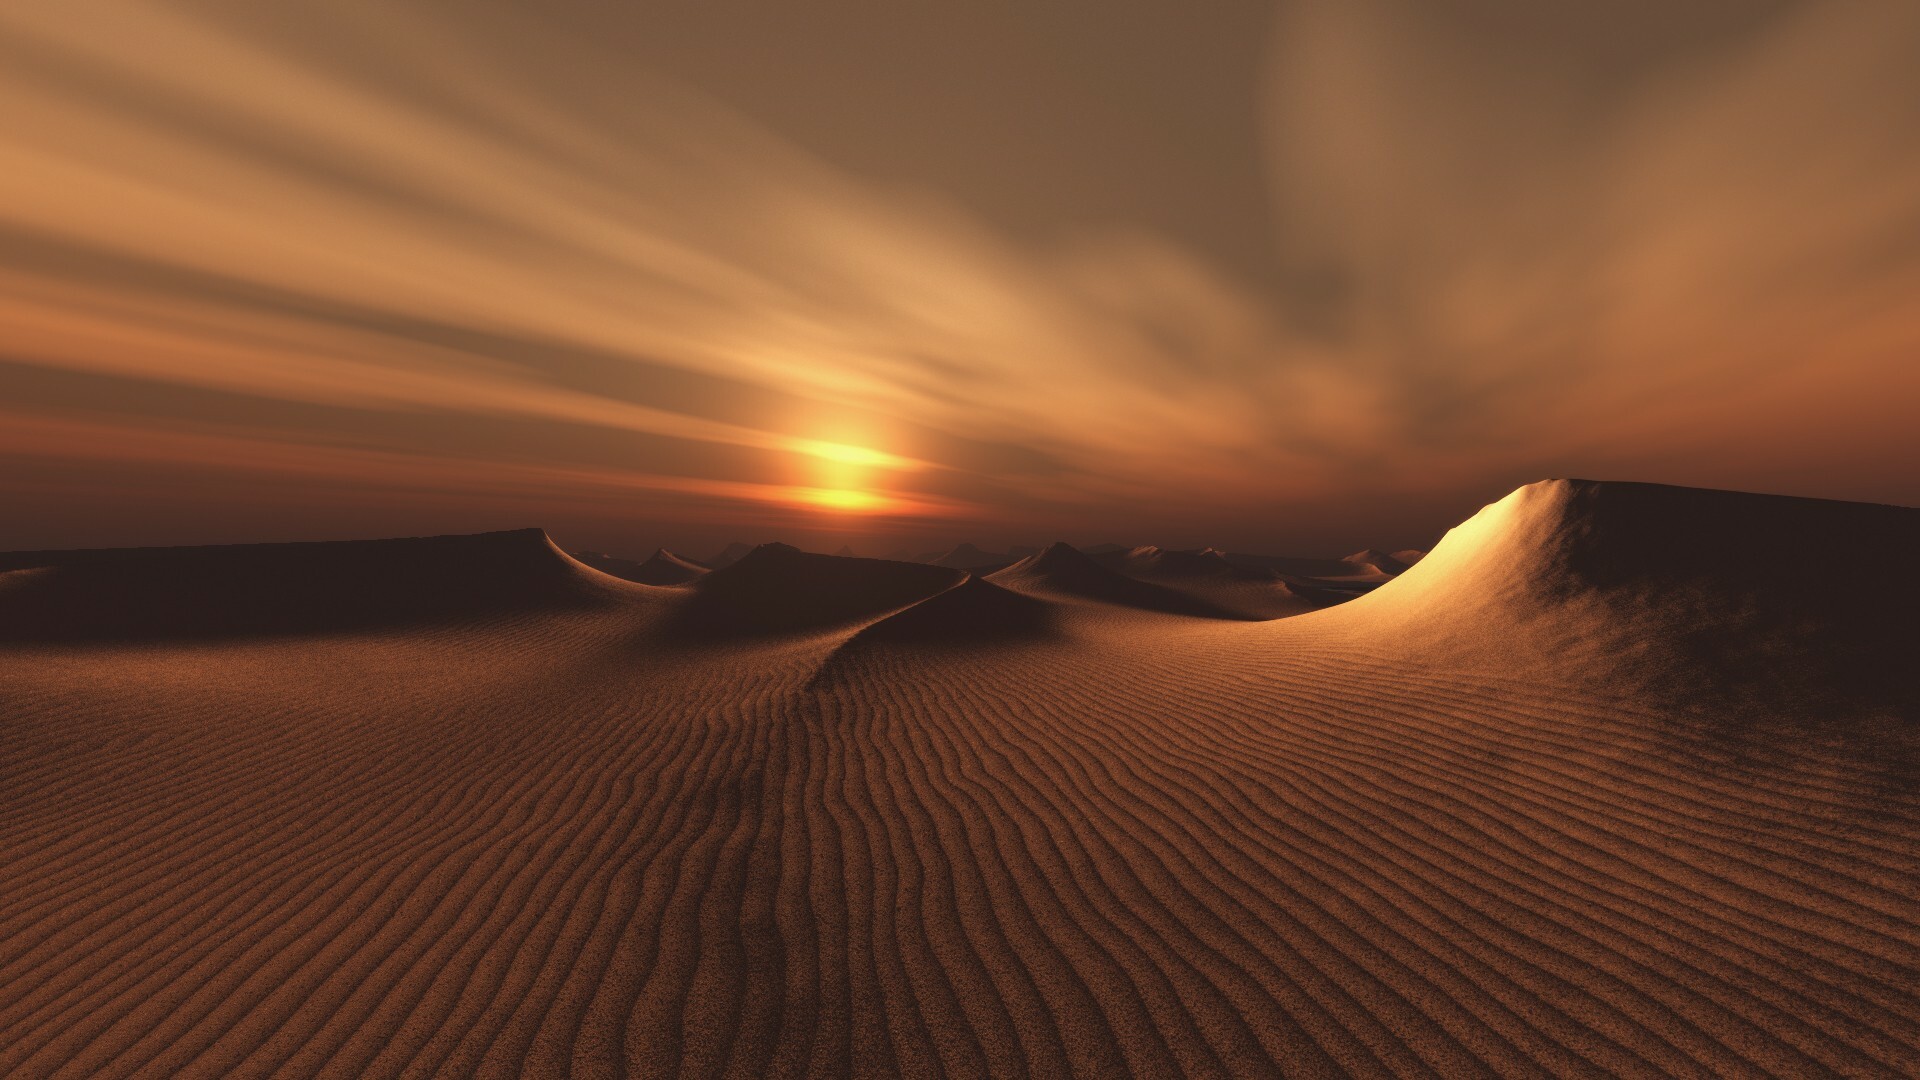 Desert: Some major oilfields such as Ghawar are found under the sands of Saudi Arabia. 1920x1080 Full HD Wallpaper.